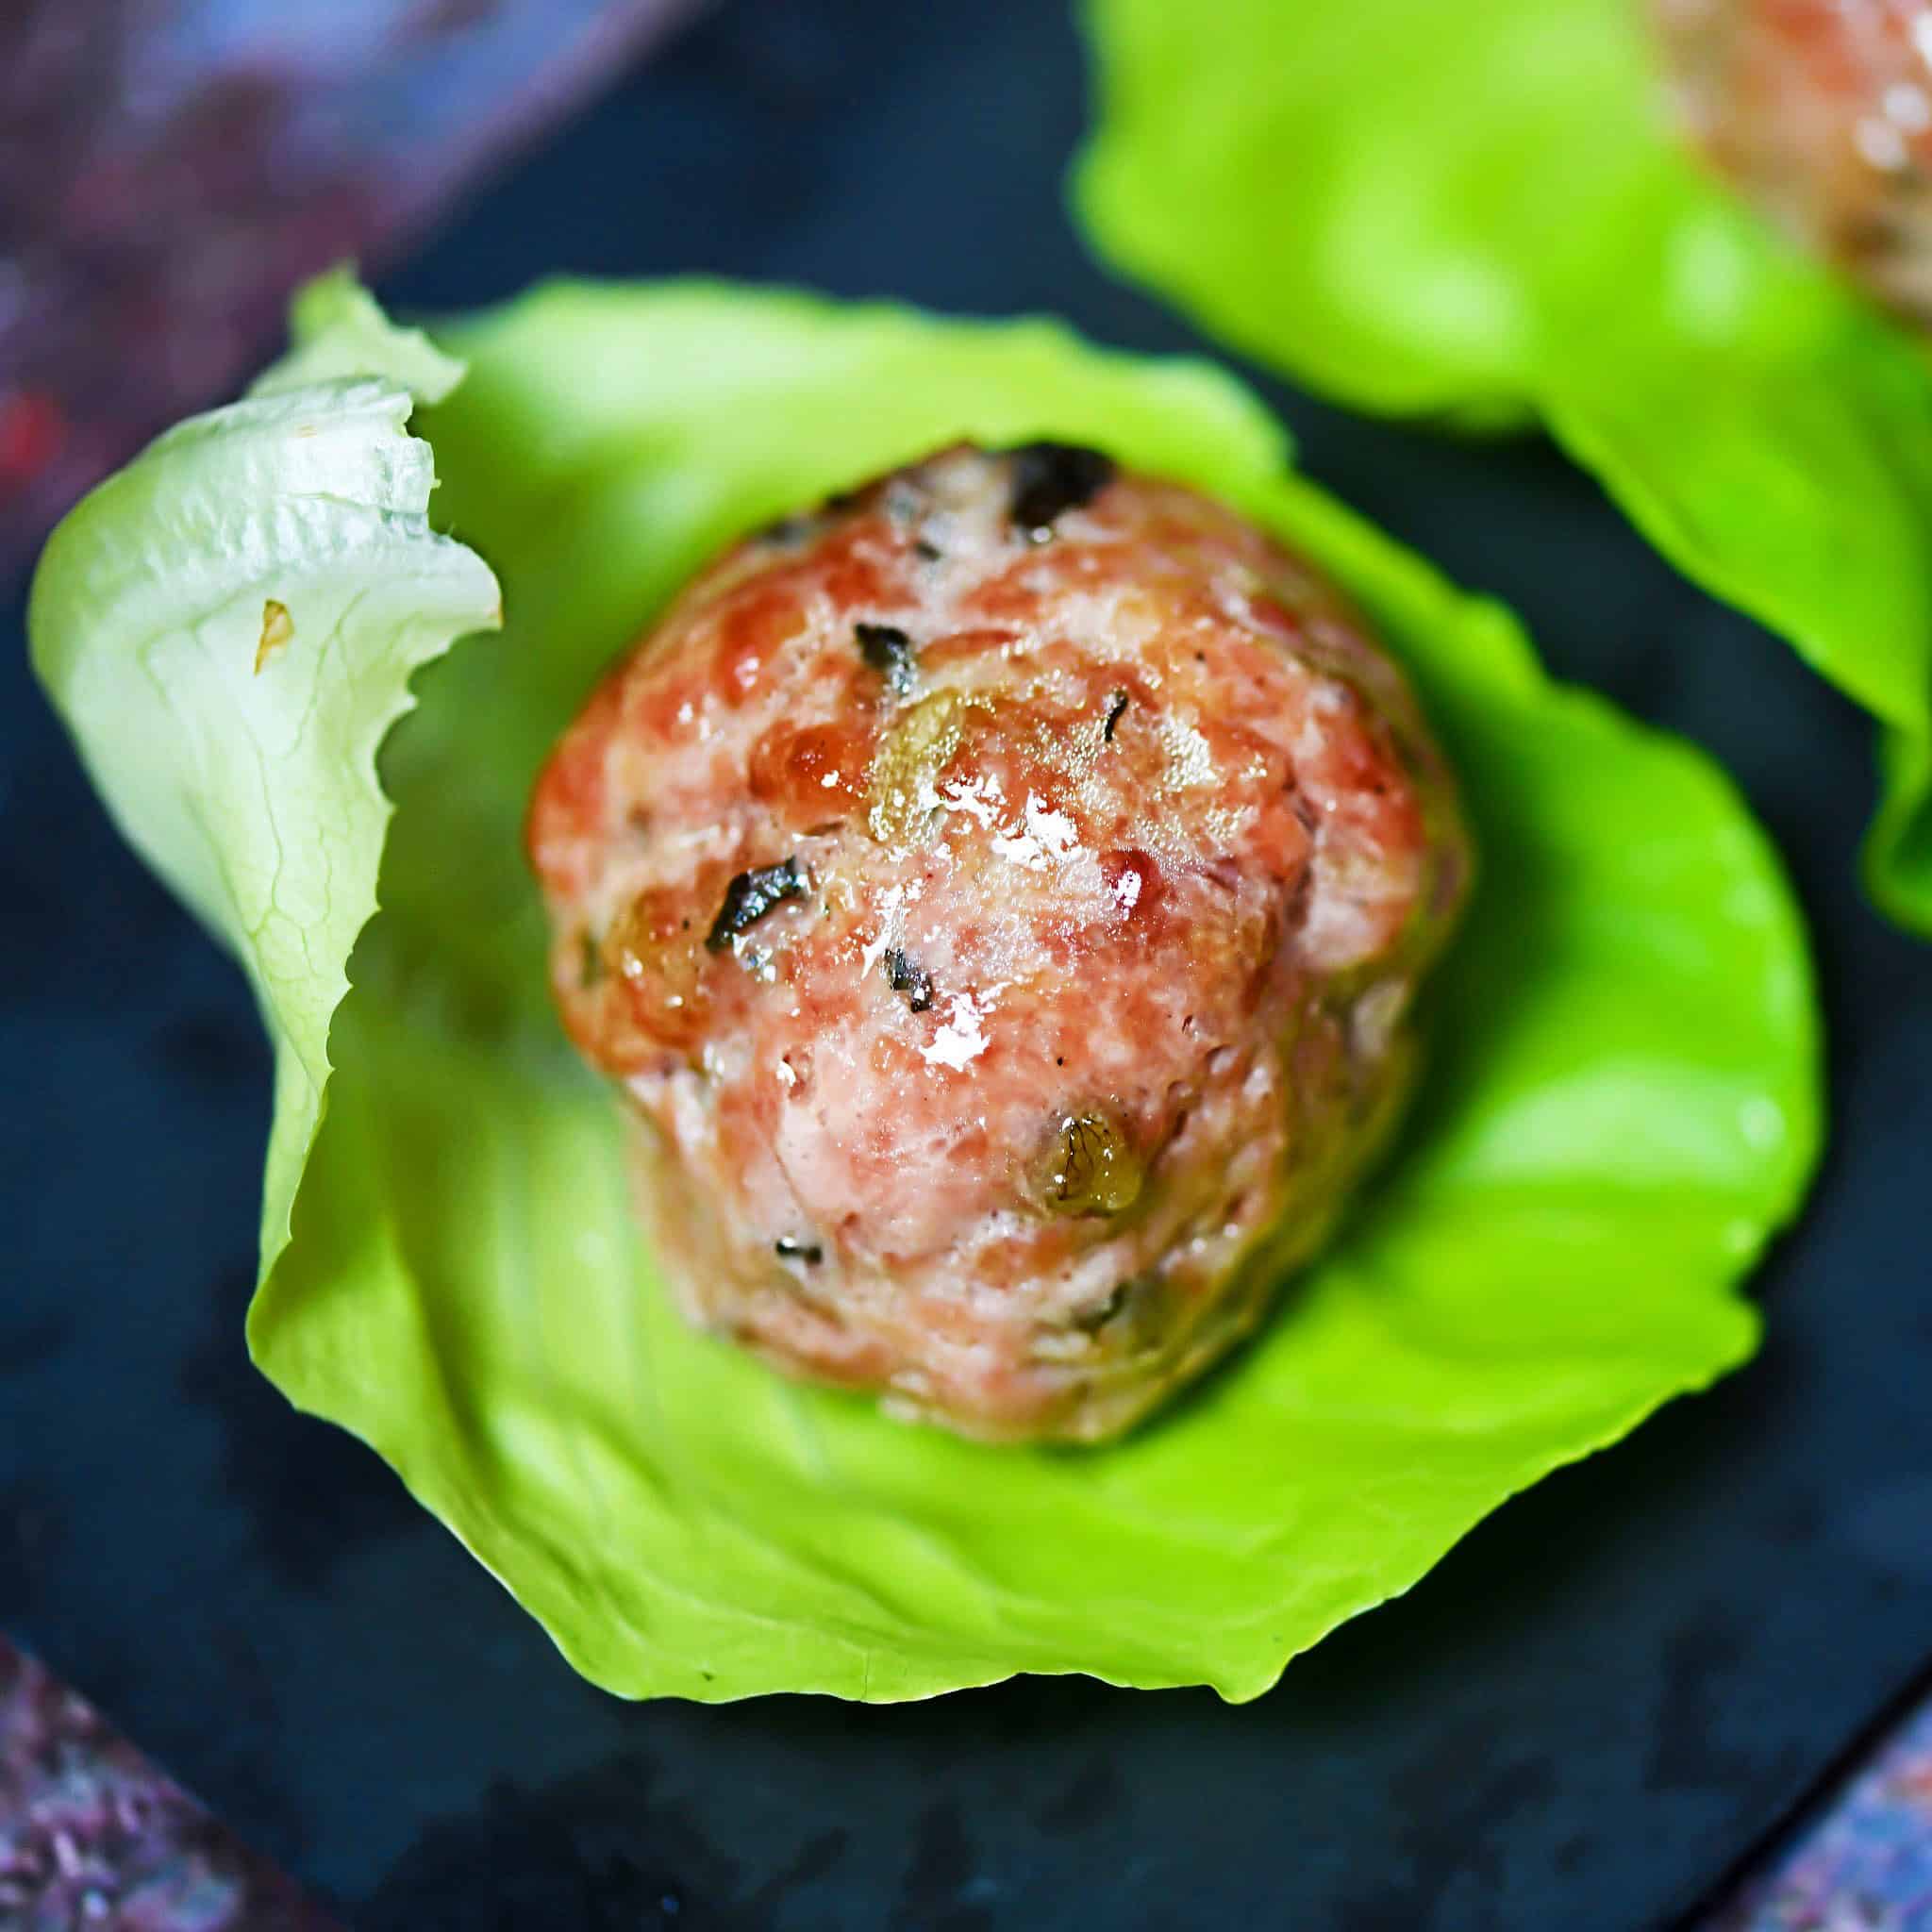 Meatballs with bib lettuce